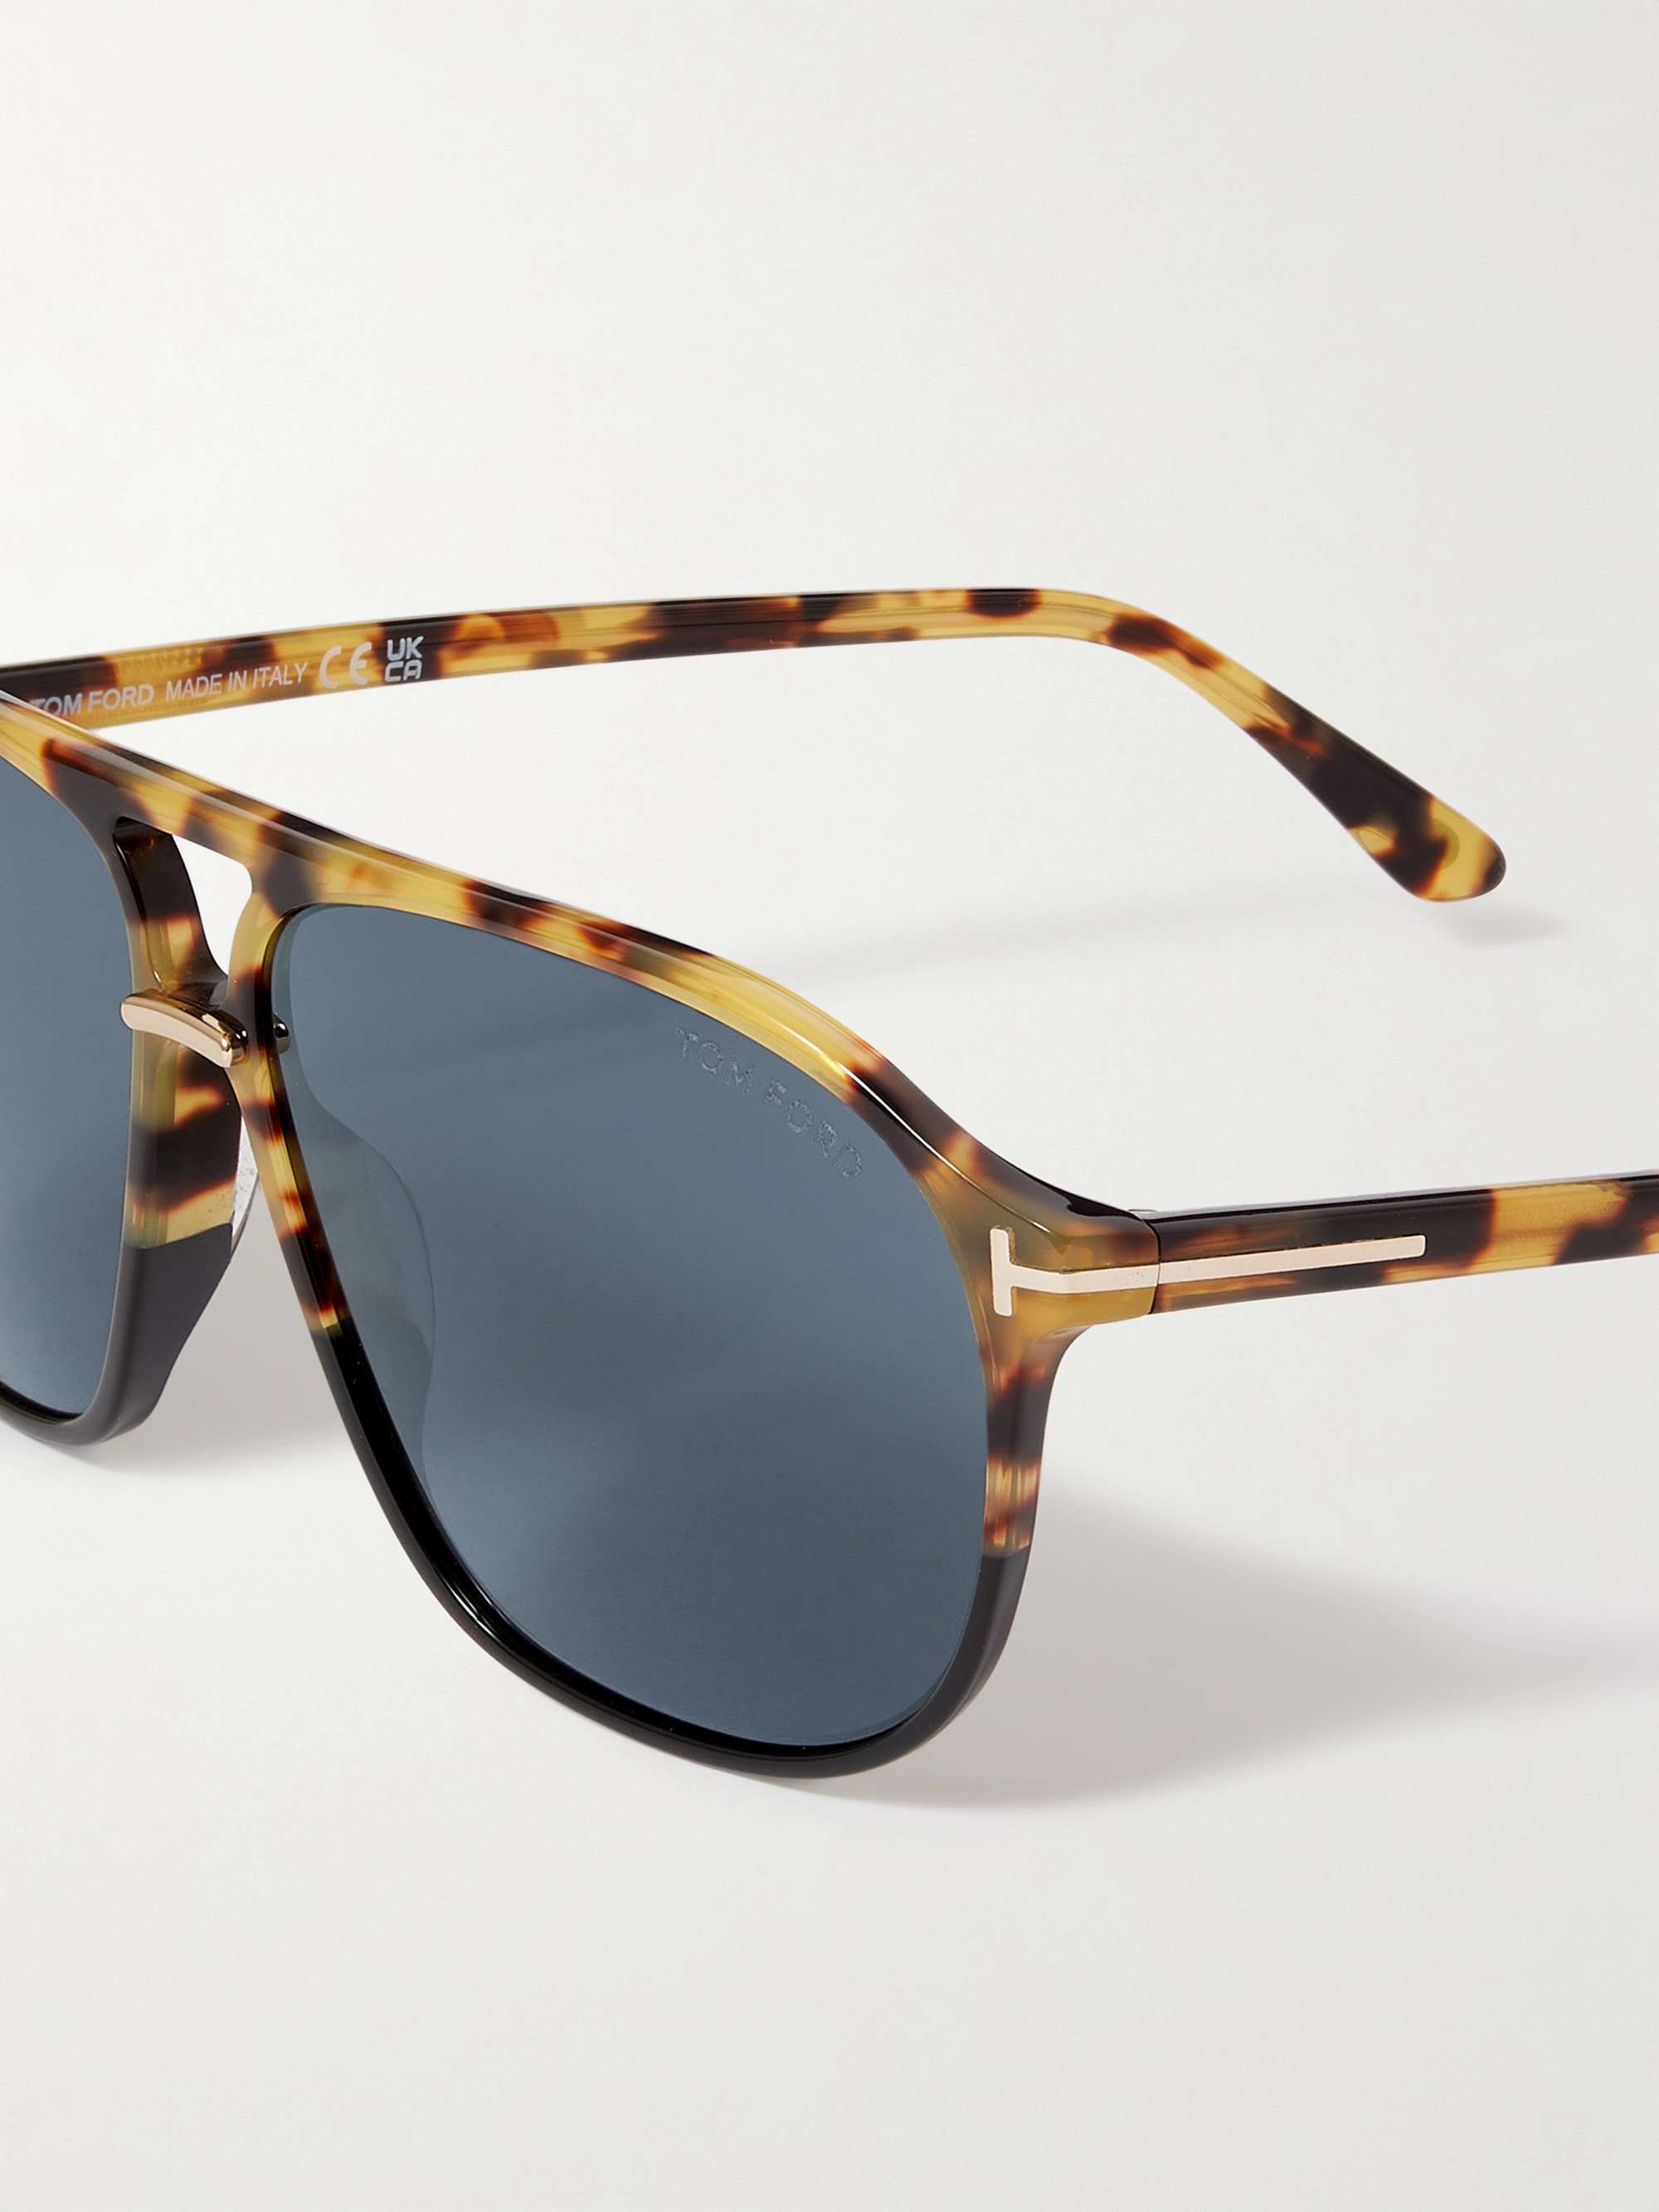 TOM FORD Aviator-Style Tortoiseshell Acetate Sunglasses